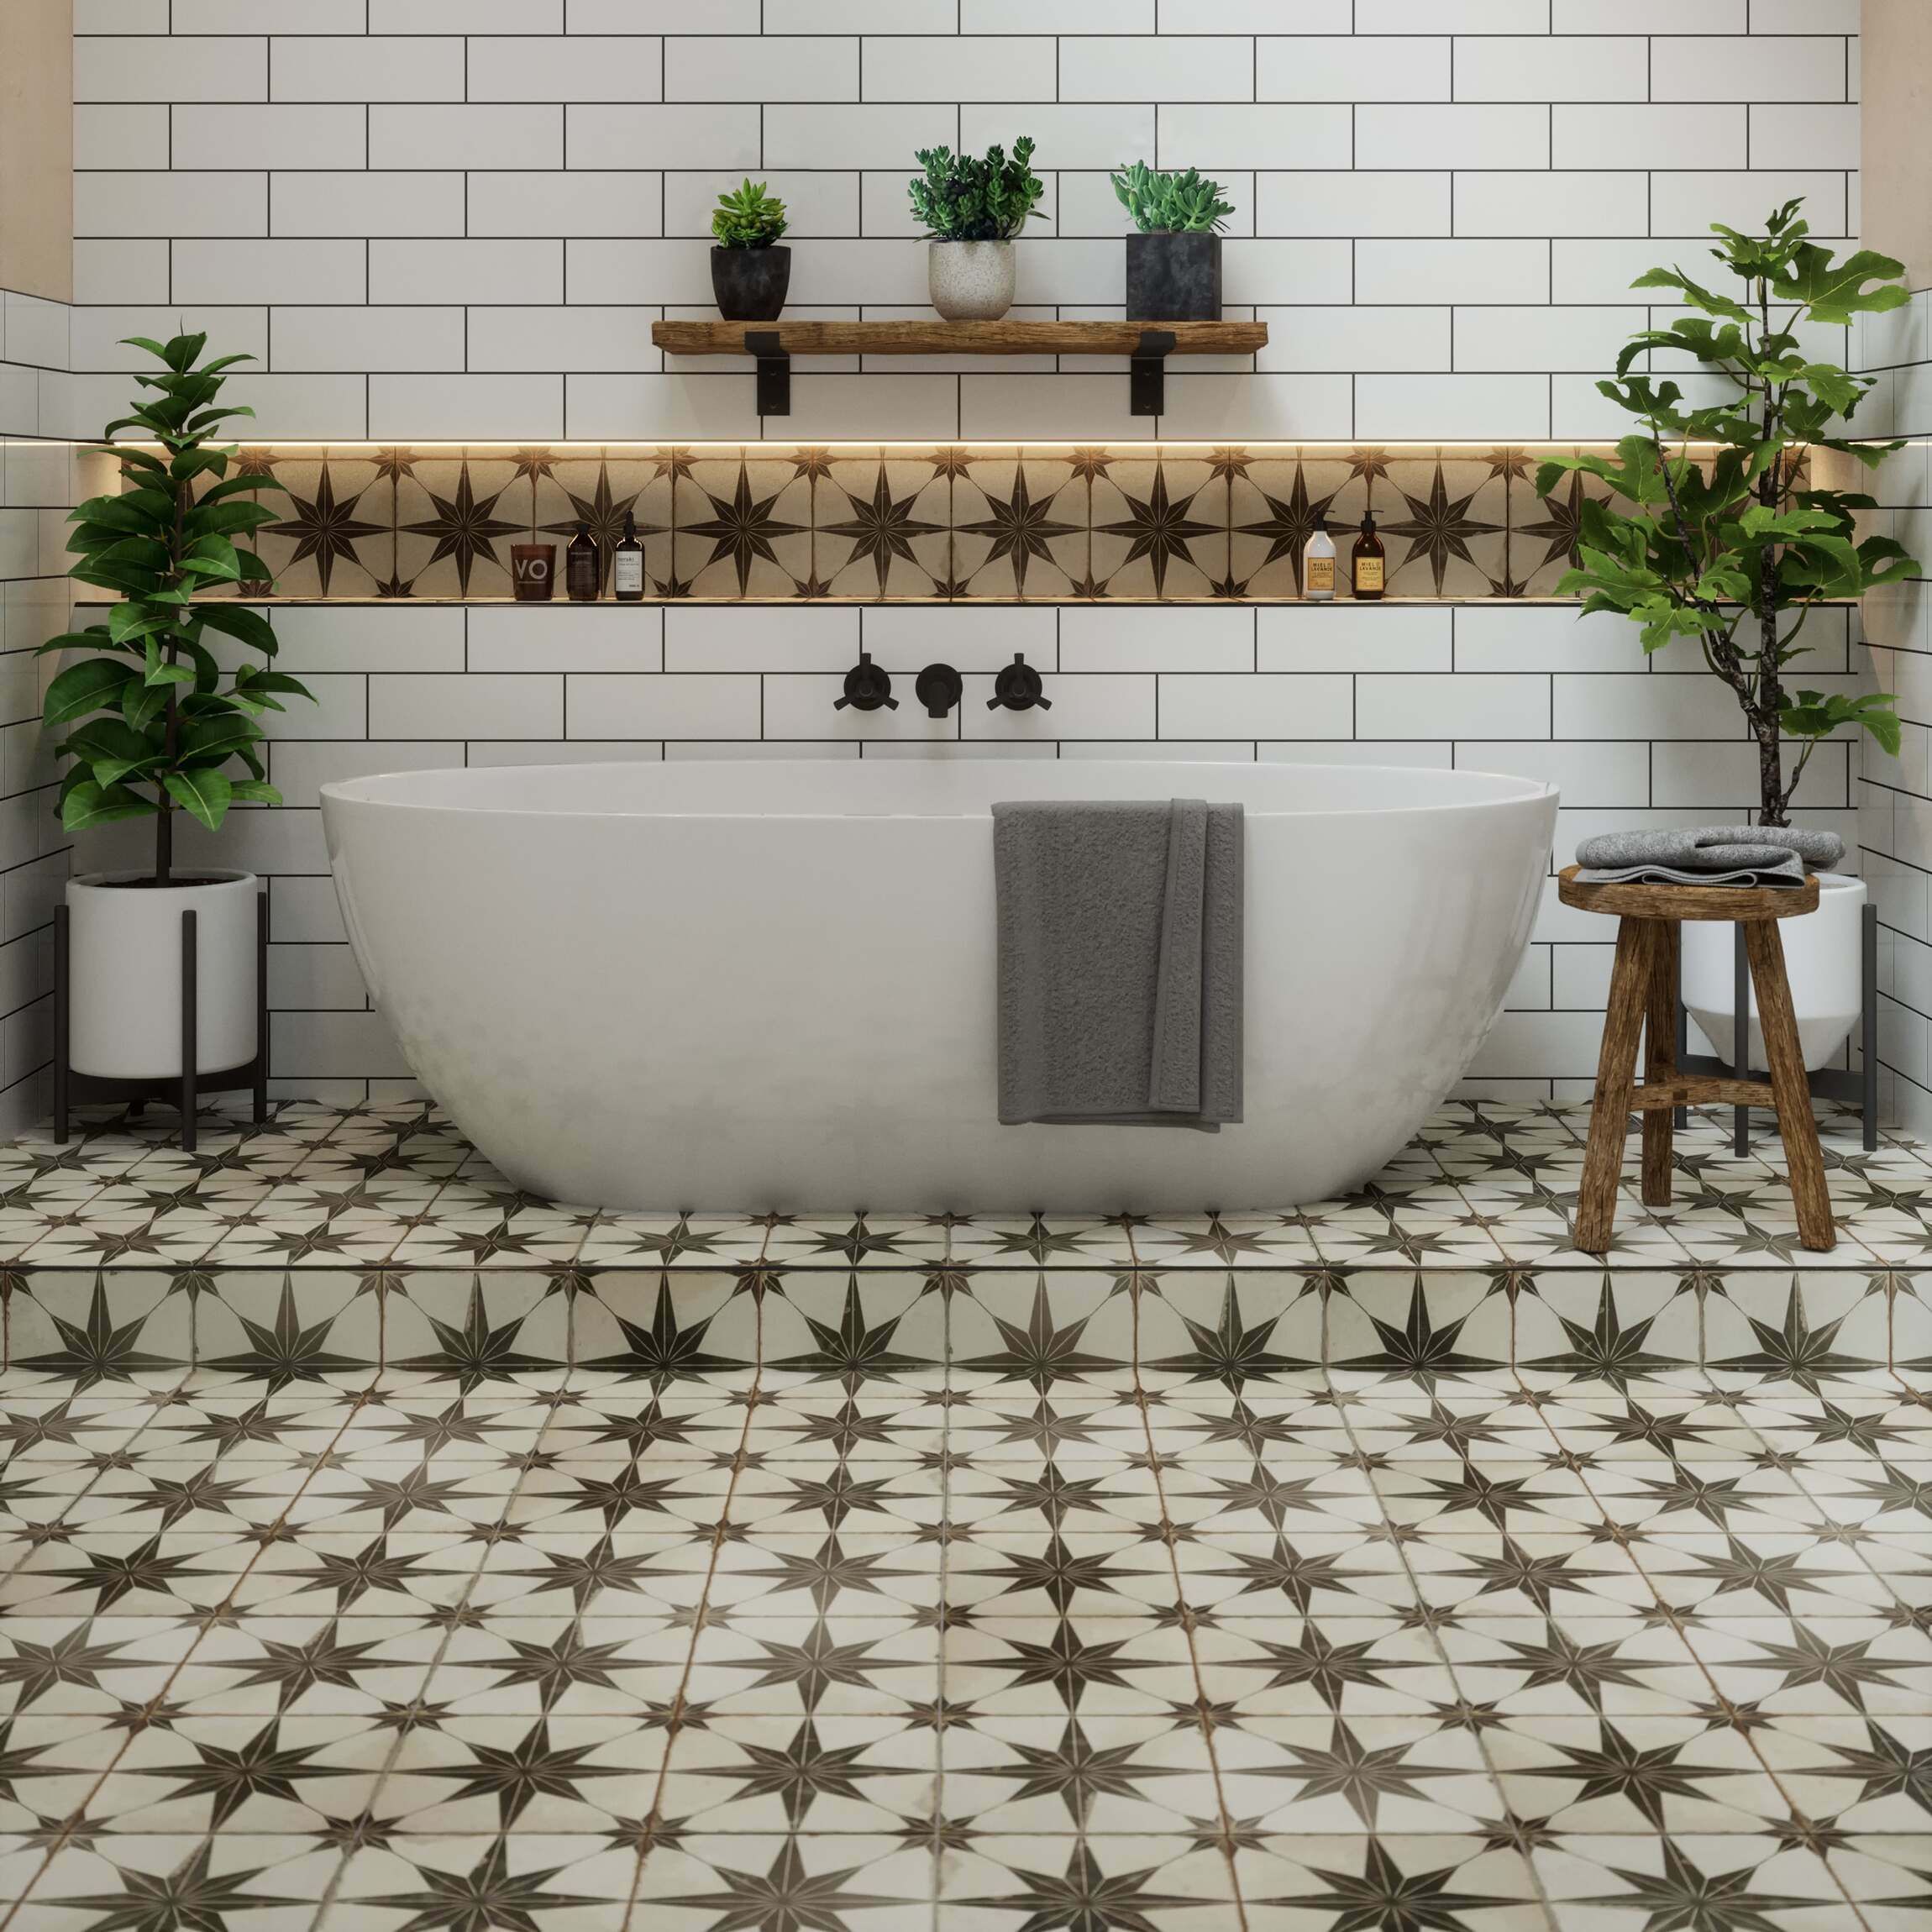 450x450 Tiles From Tile Mountain, Vintage Bathroom Tiles Uk